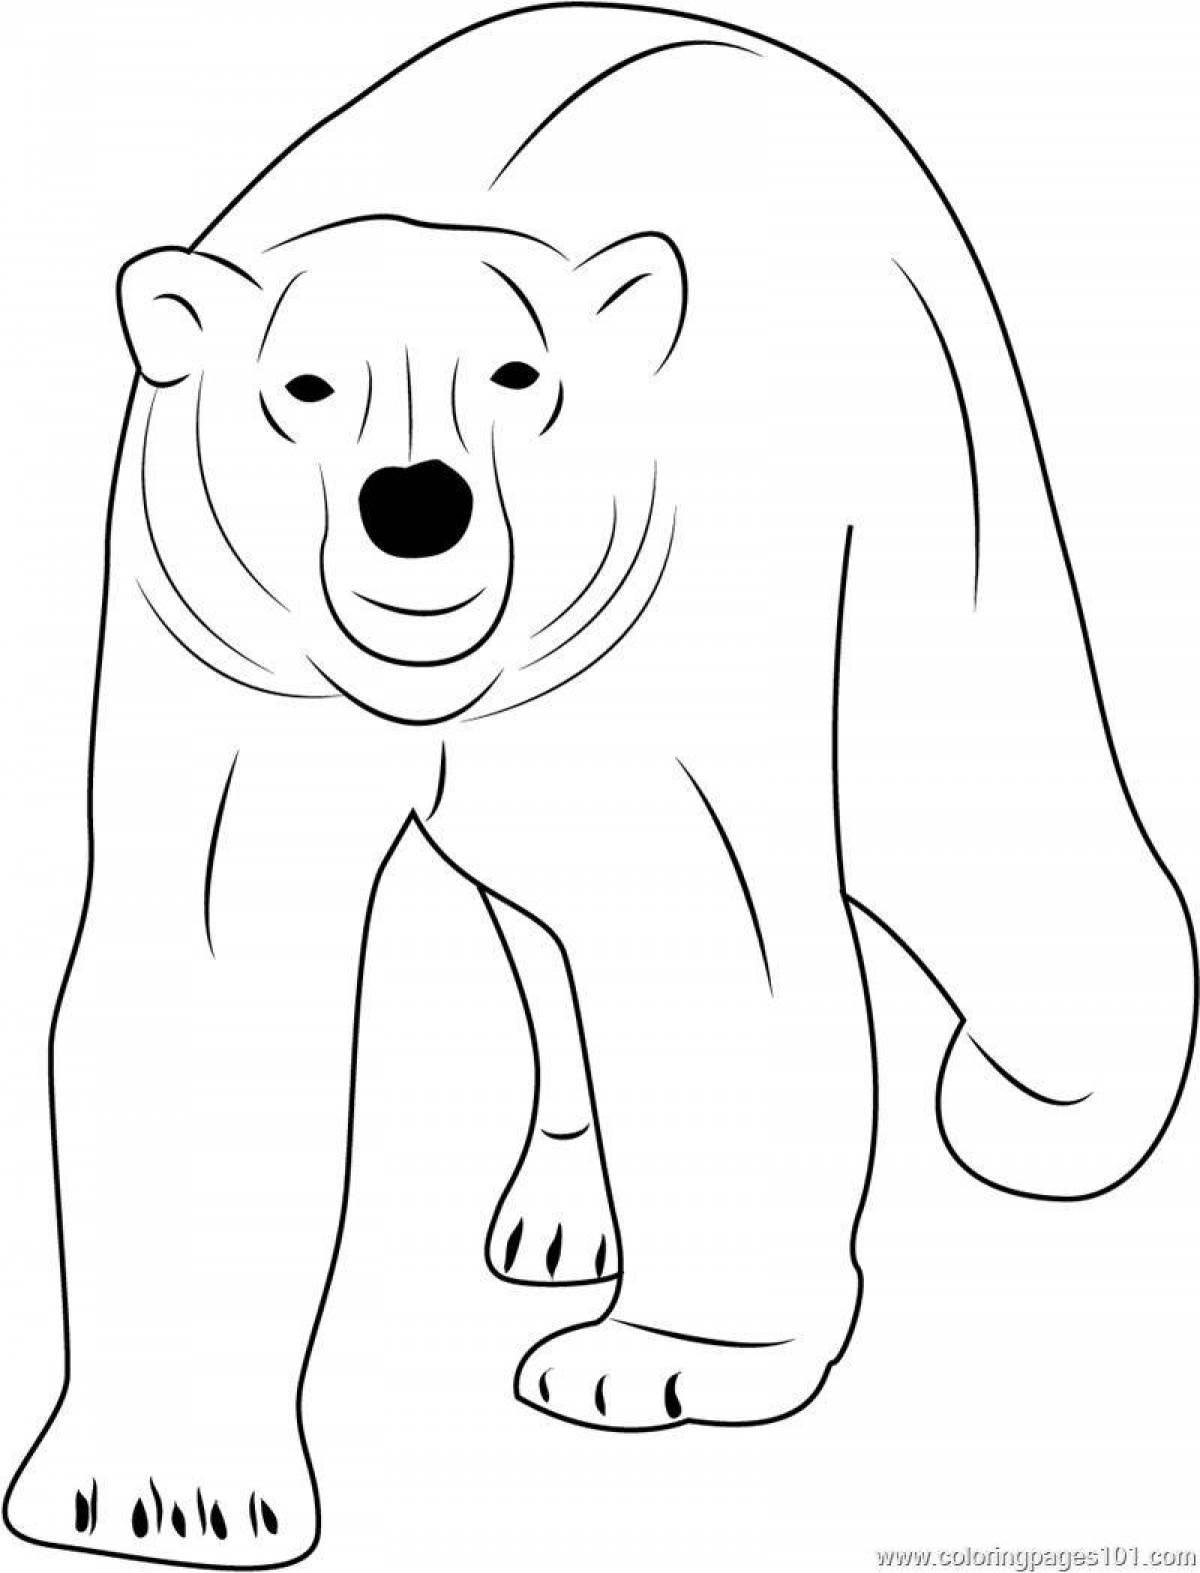 Sweet polar bear drawing